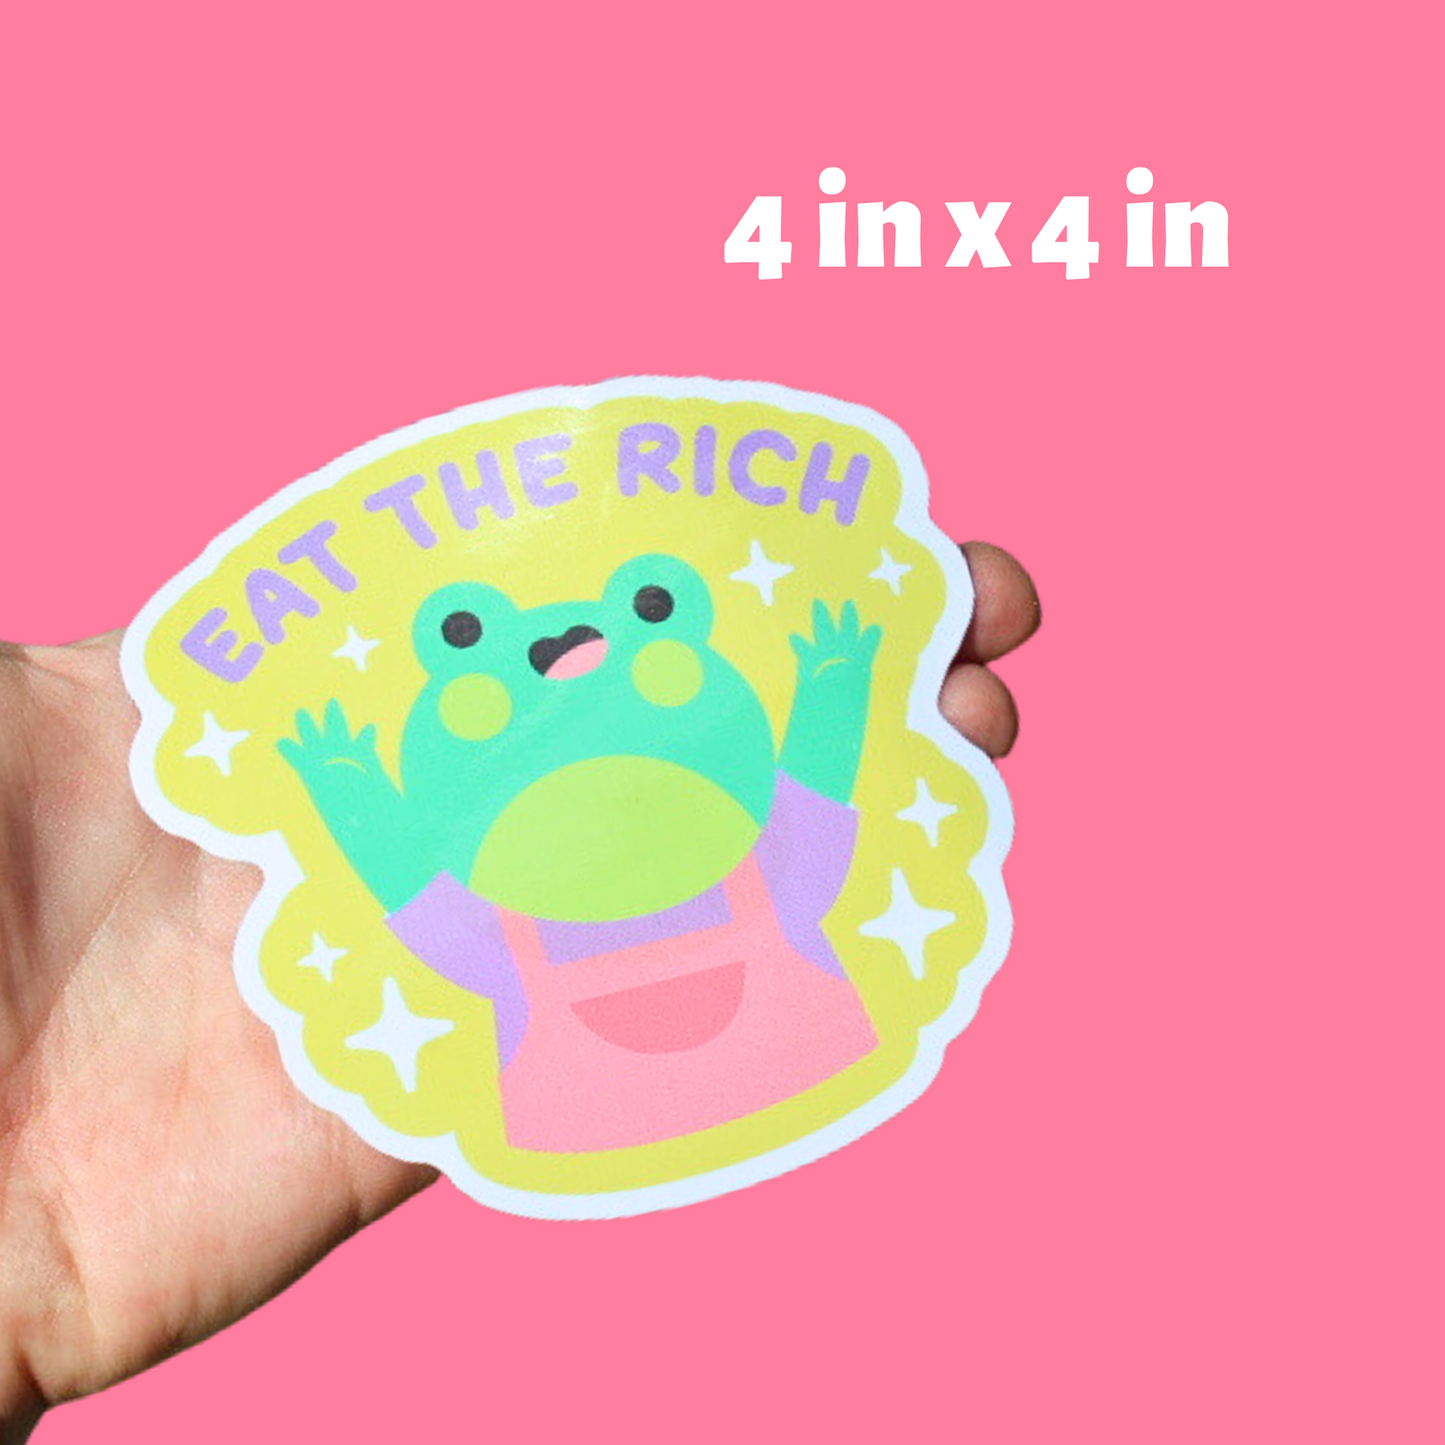 Eat the Rich Sticker